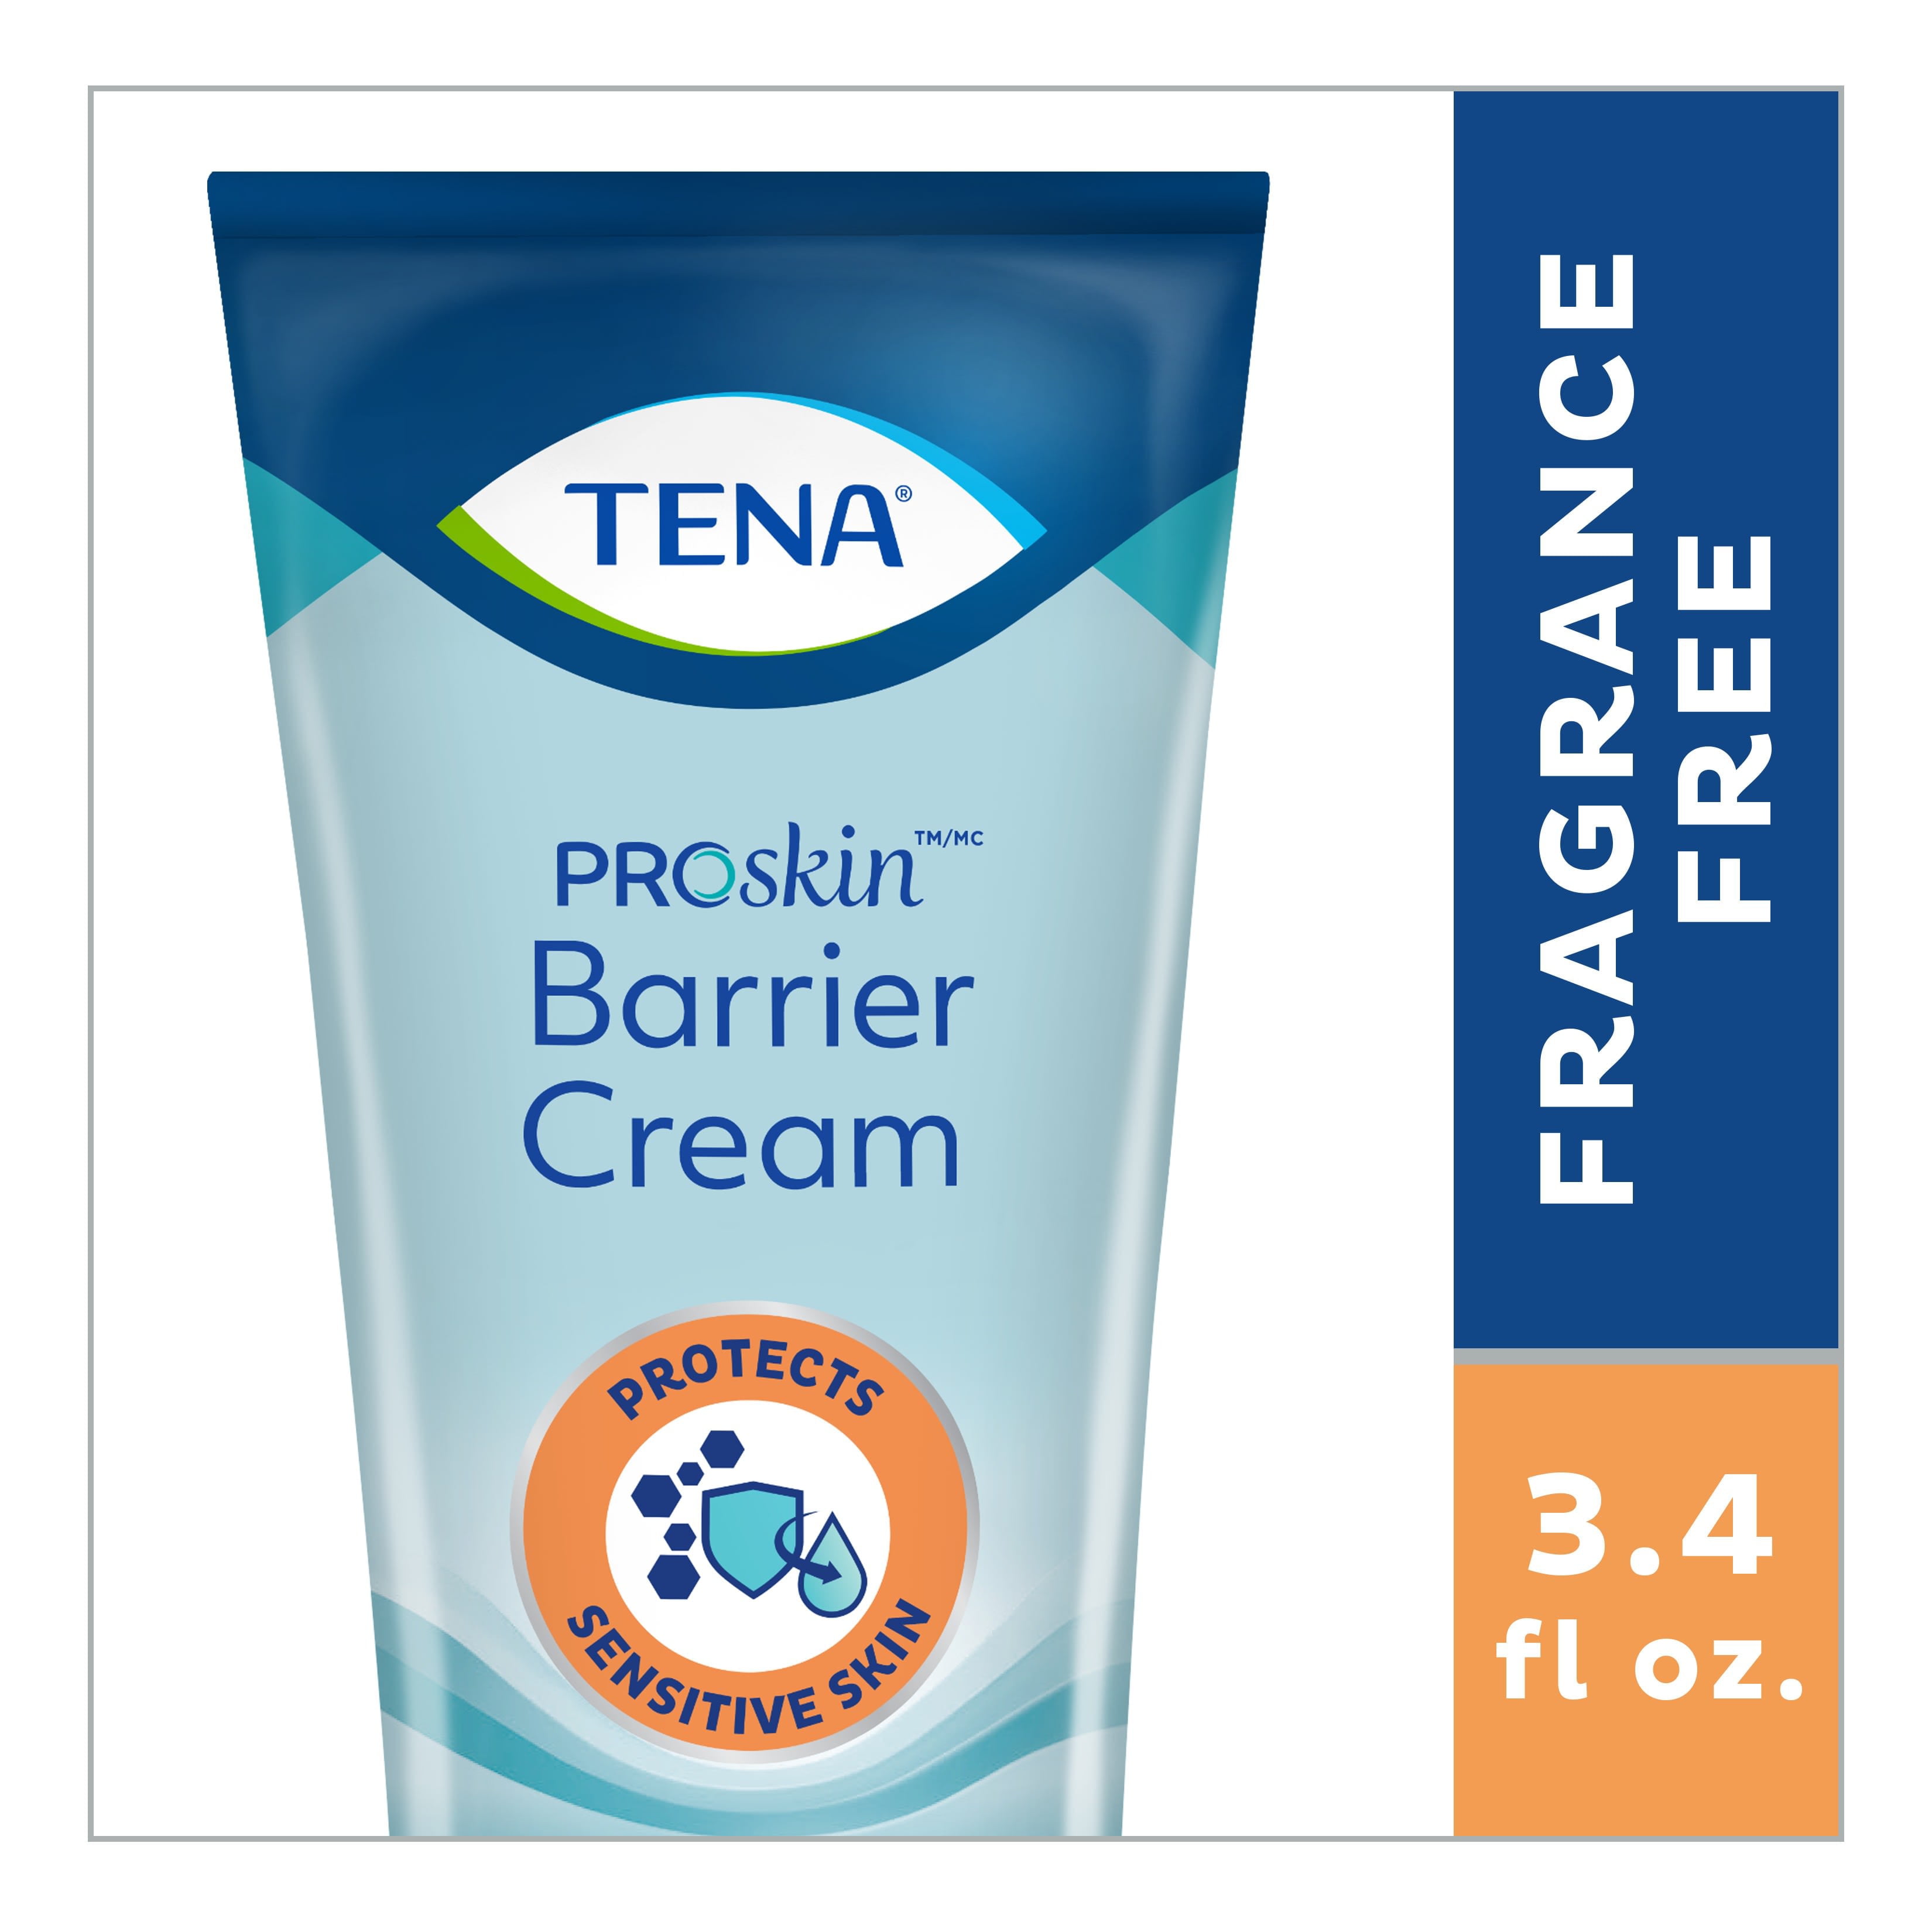 Tena ProSkin Barrier Cream for Fragile Skin, Fragrance Free, 3.4 fl oz photo